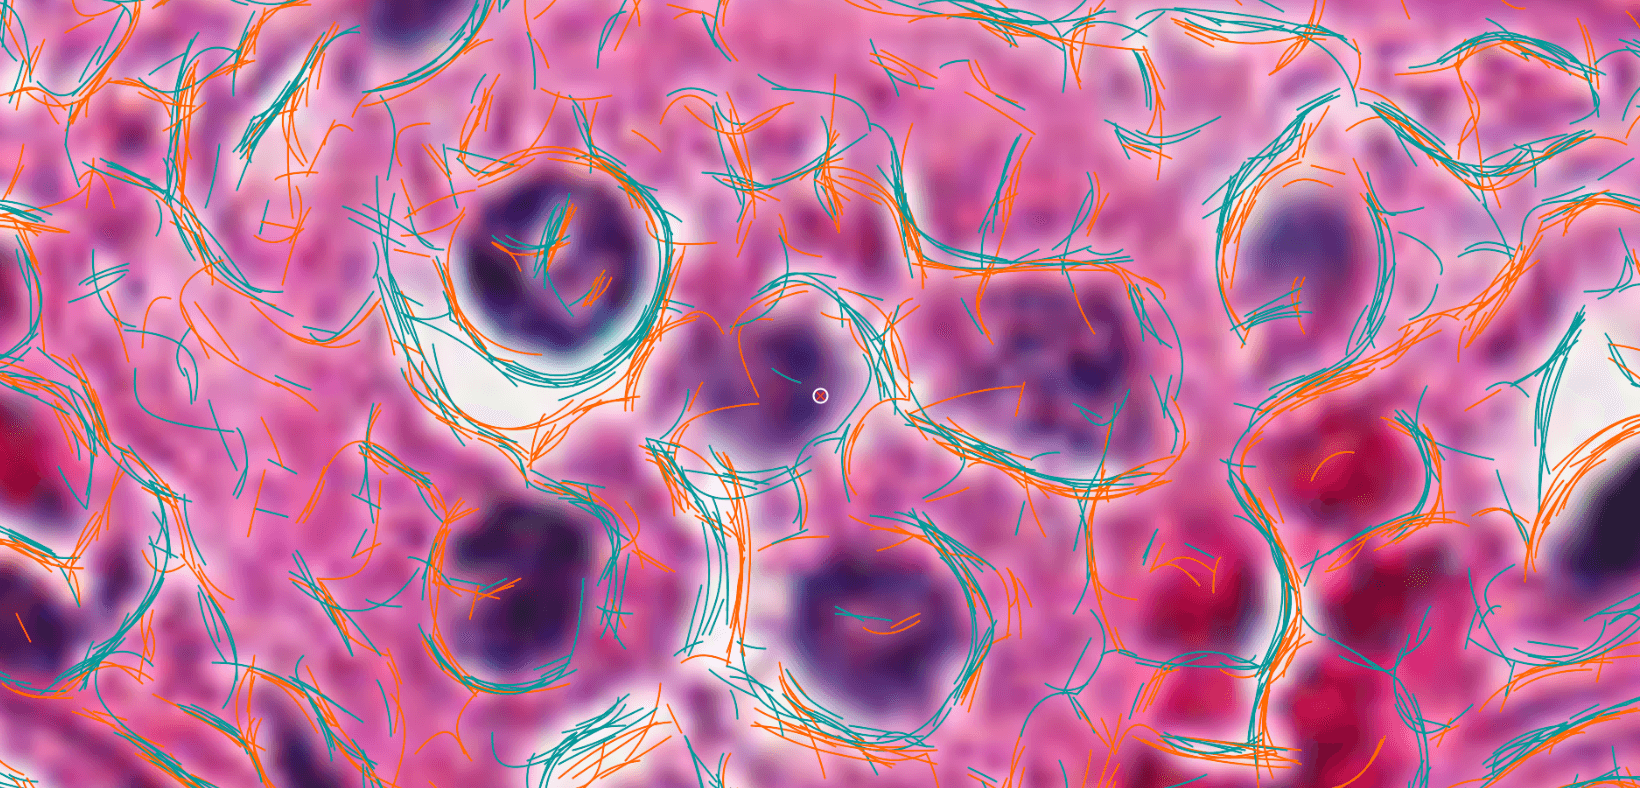 Bézier curves encircling pleomorphic cells